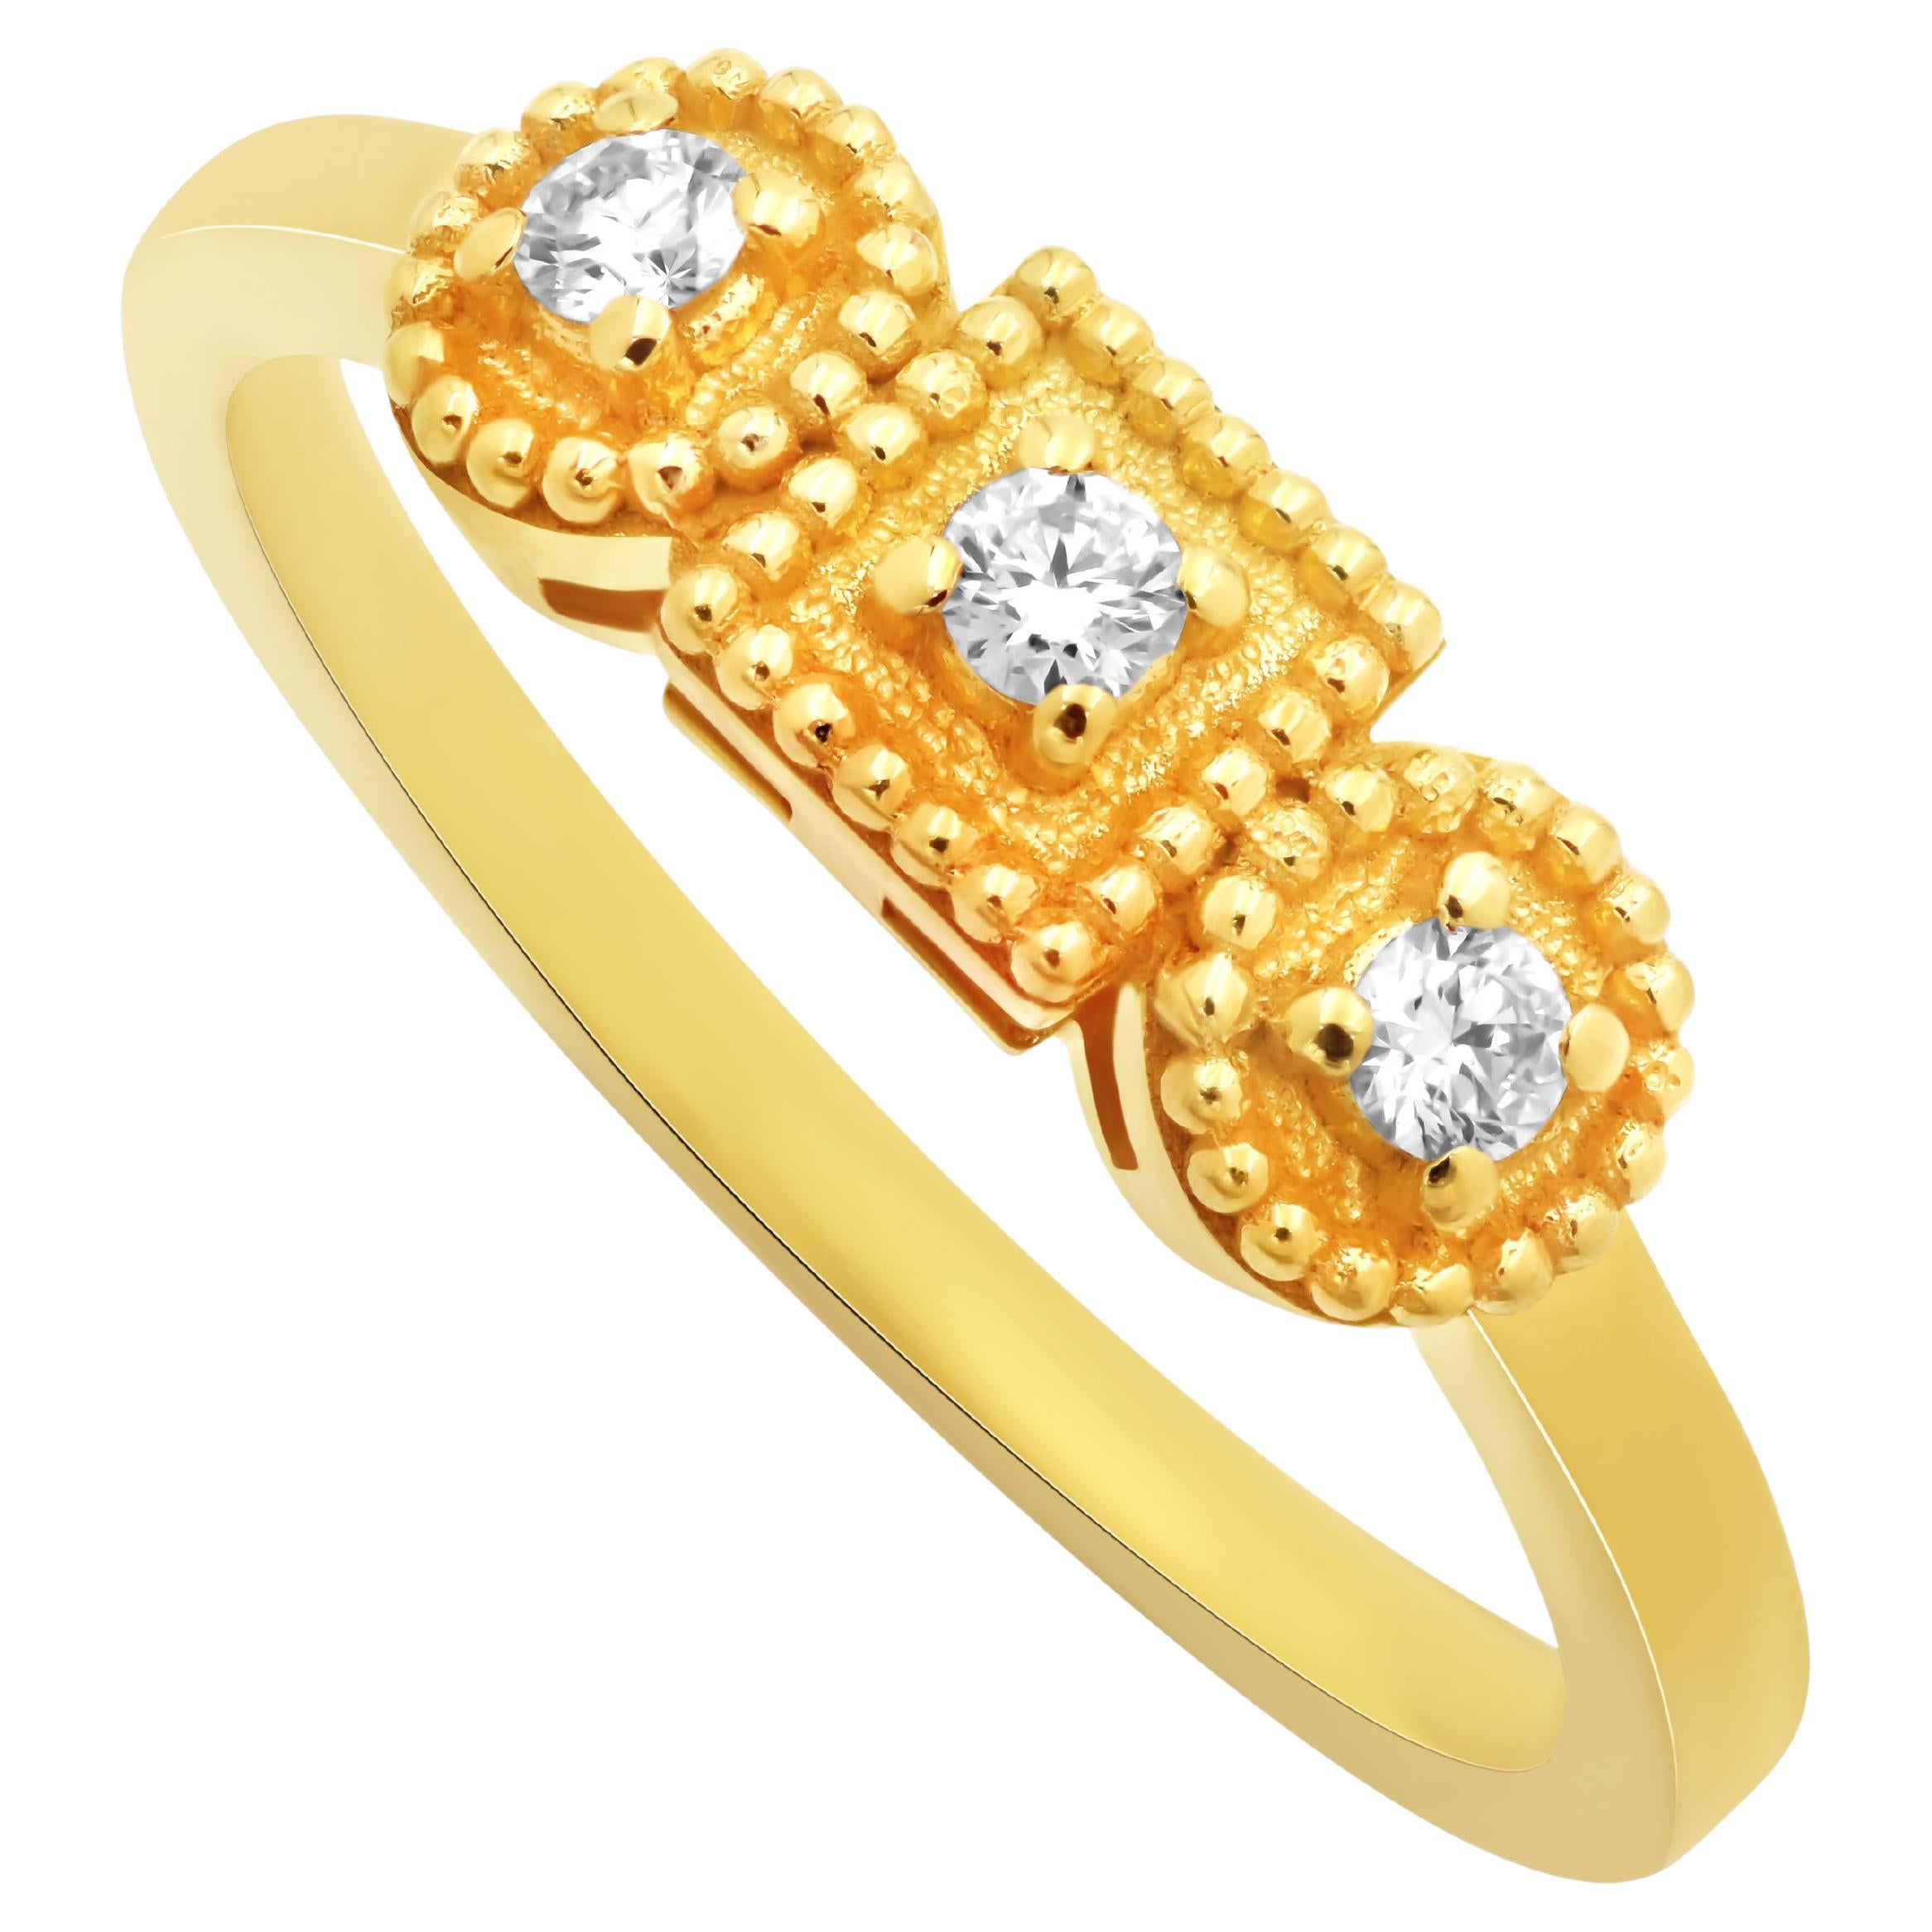 Dimos 18k Gold Granular Balance Ring with Diamonds For Sale